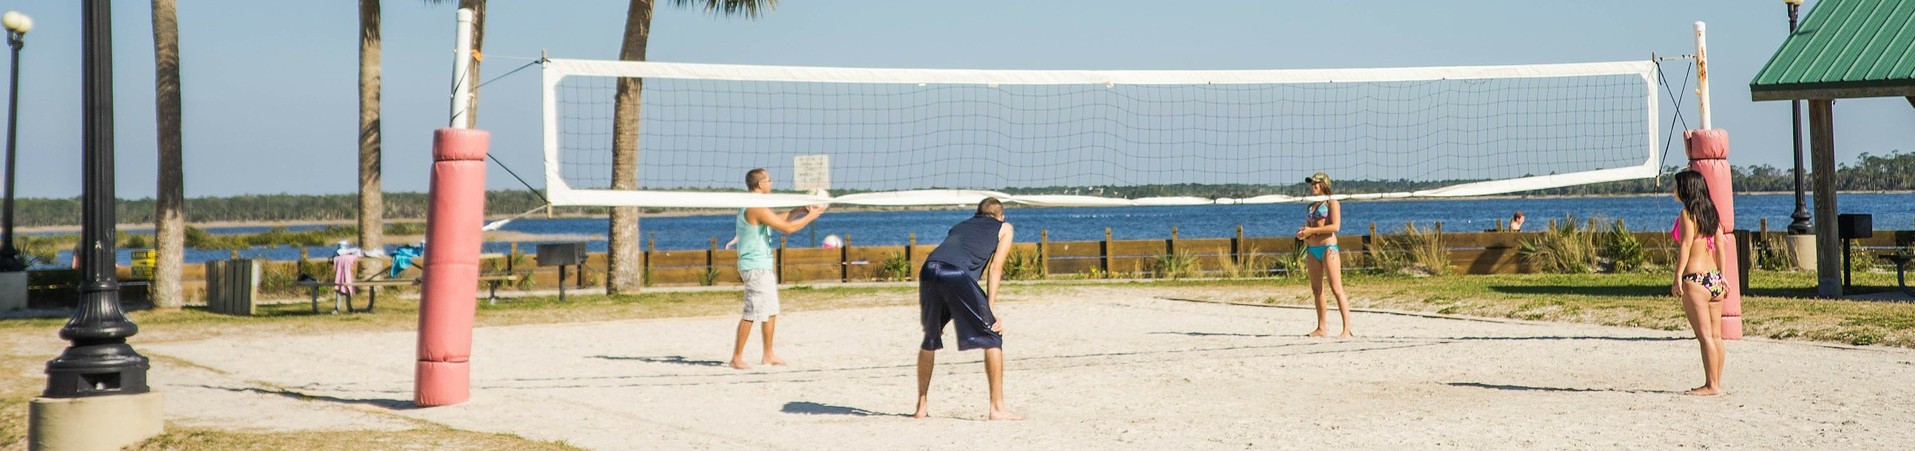 beach-volleyball-309276_1920